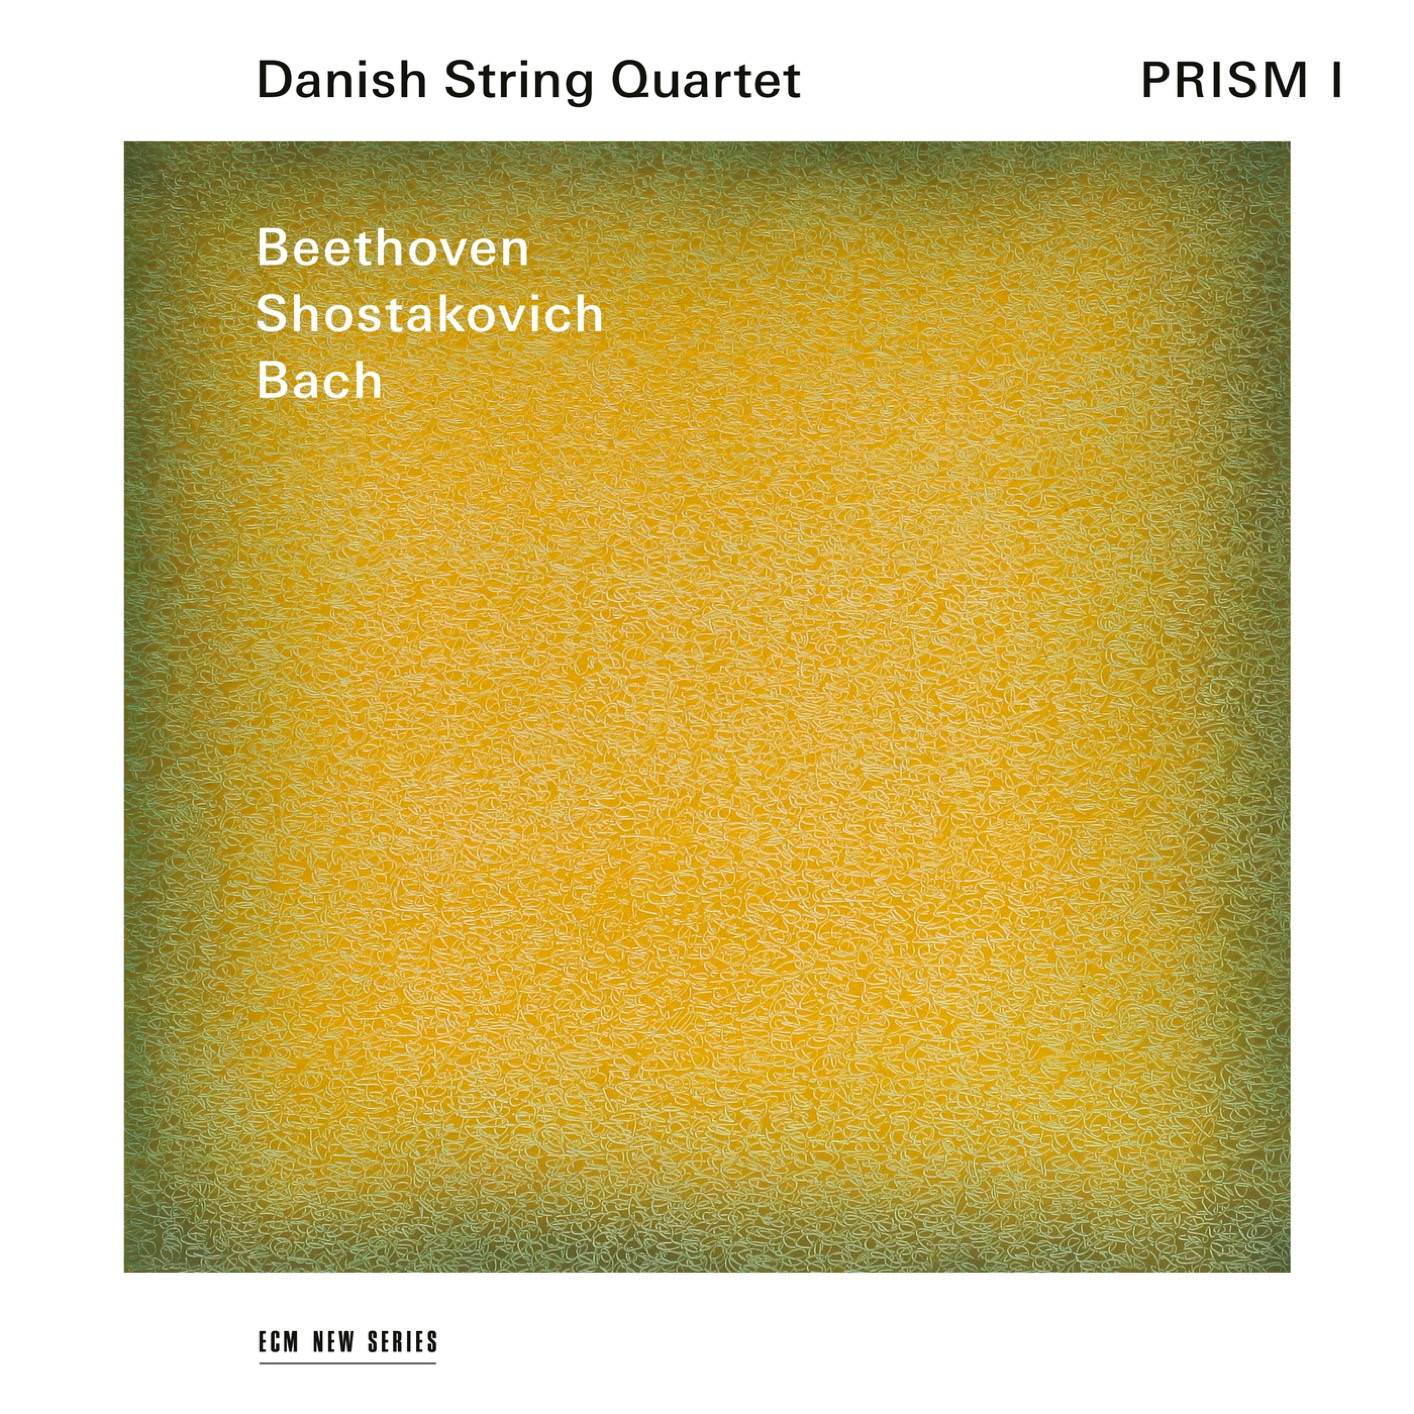 Danish String Quartet – Prism I (2018) [FLAC 24bit/96kHz]